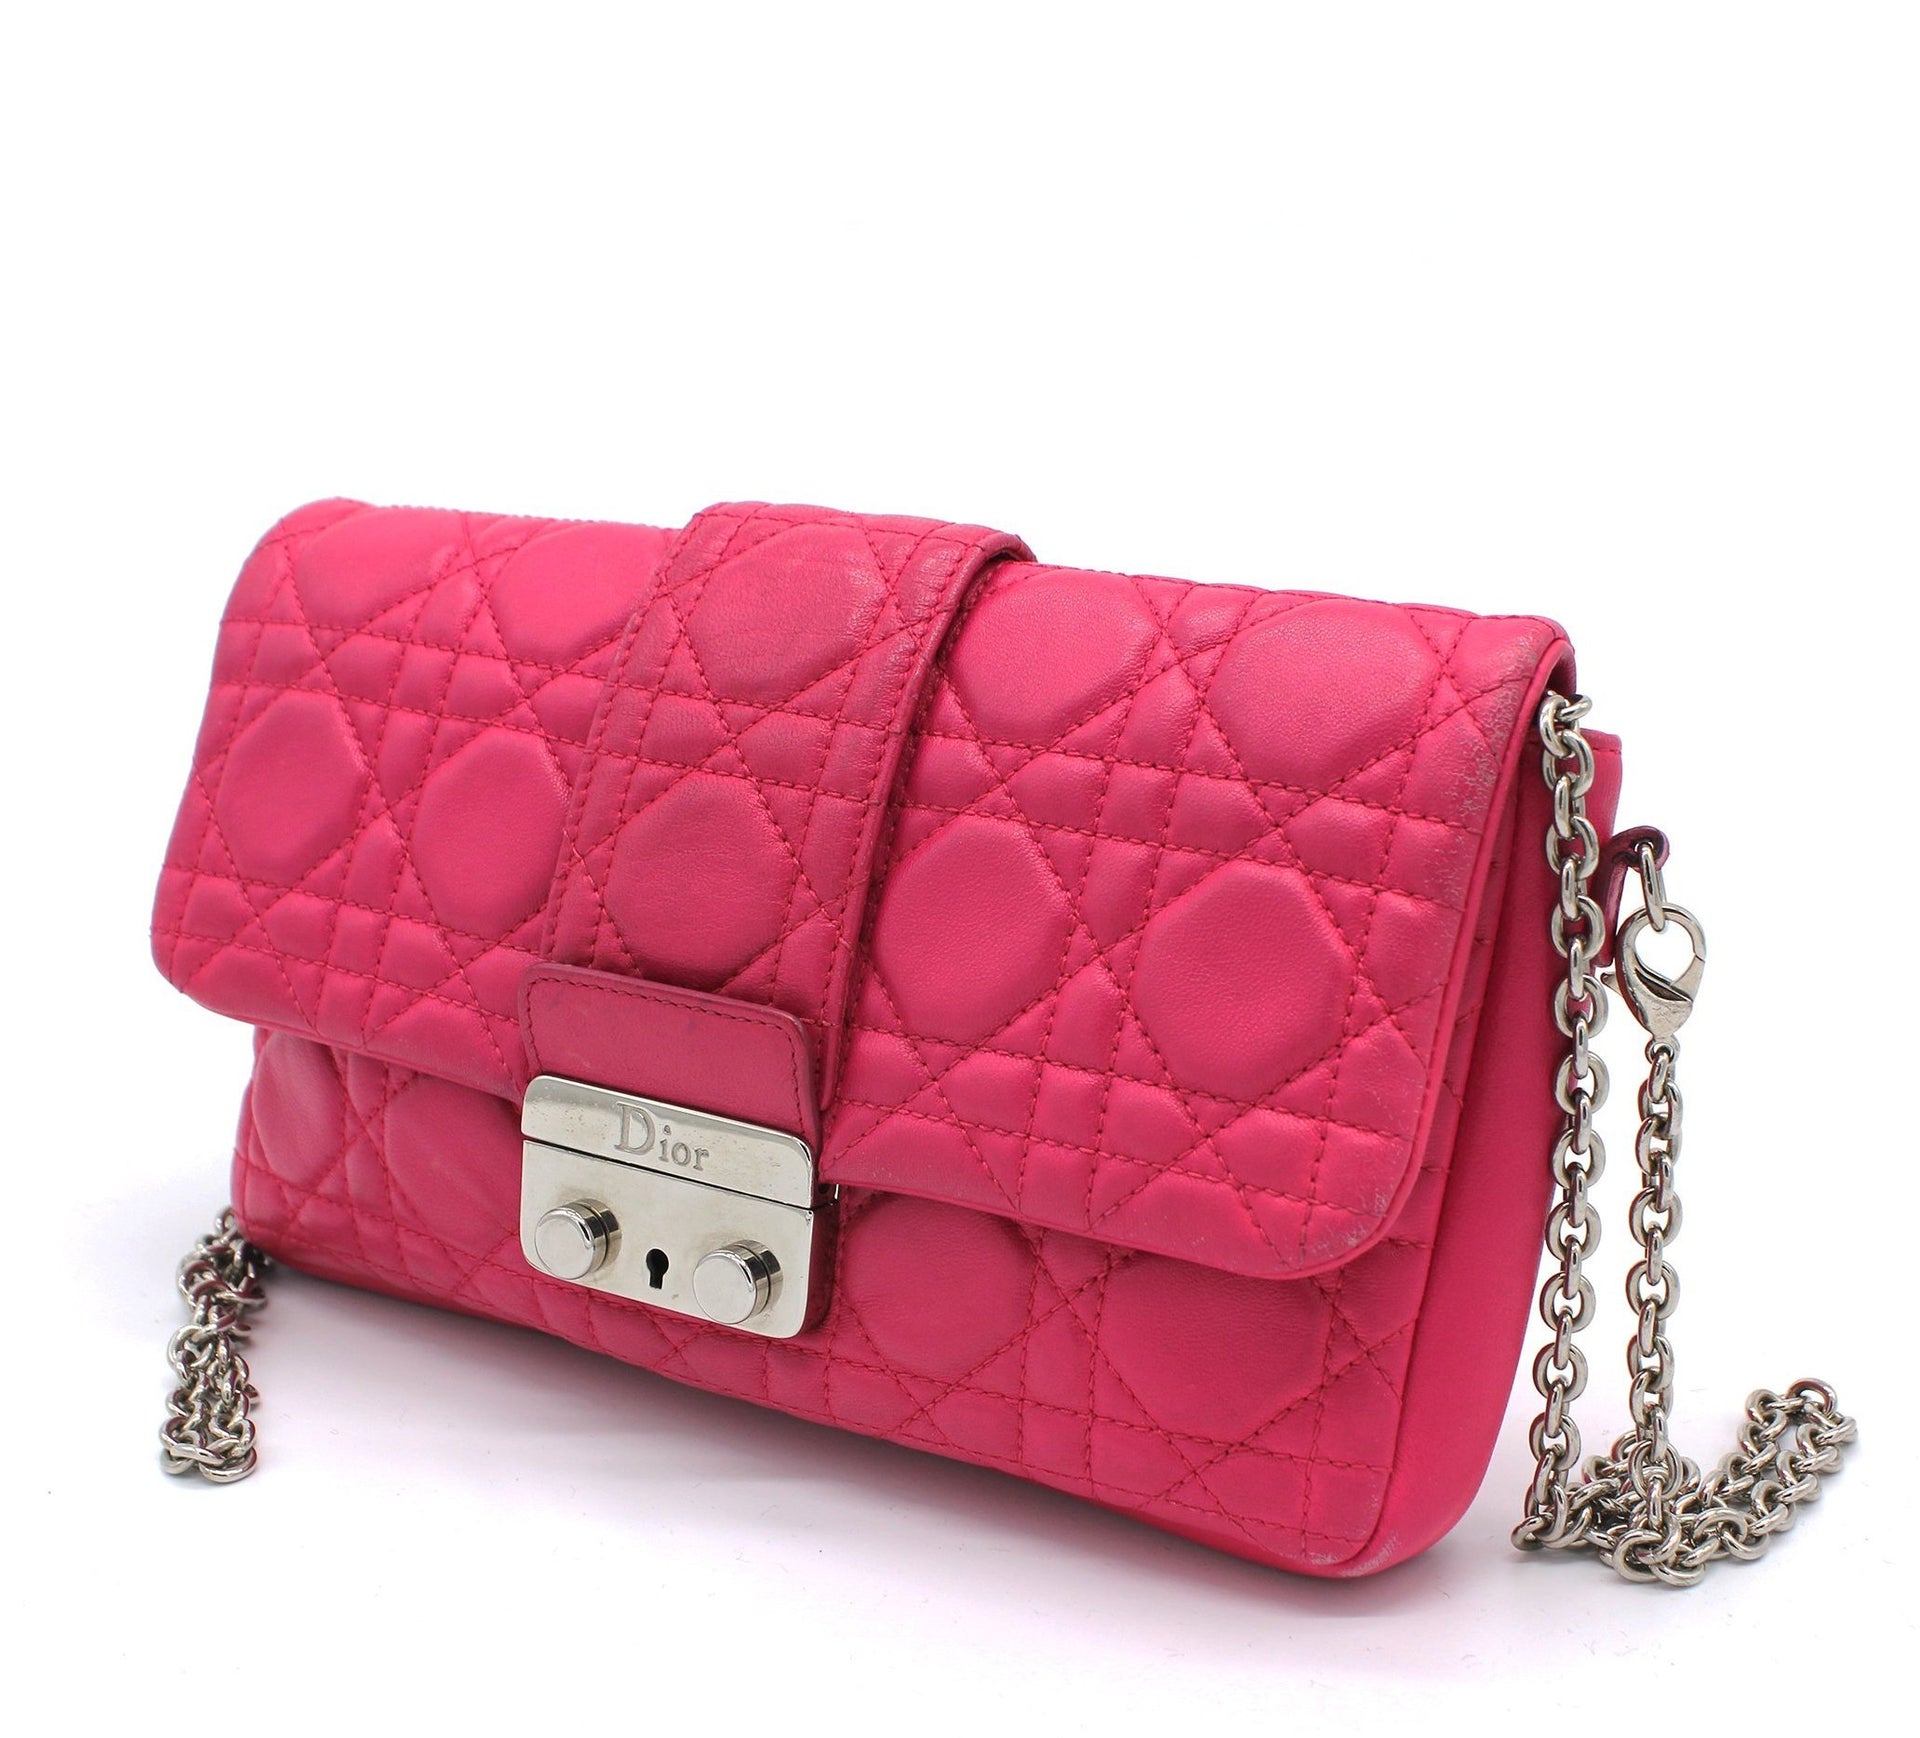 Dior handbag hi-res stock photography and images - Alamy